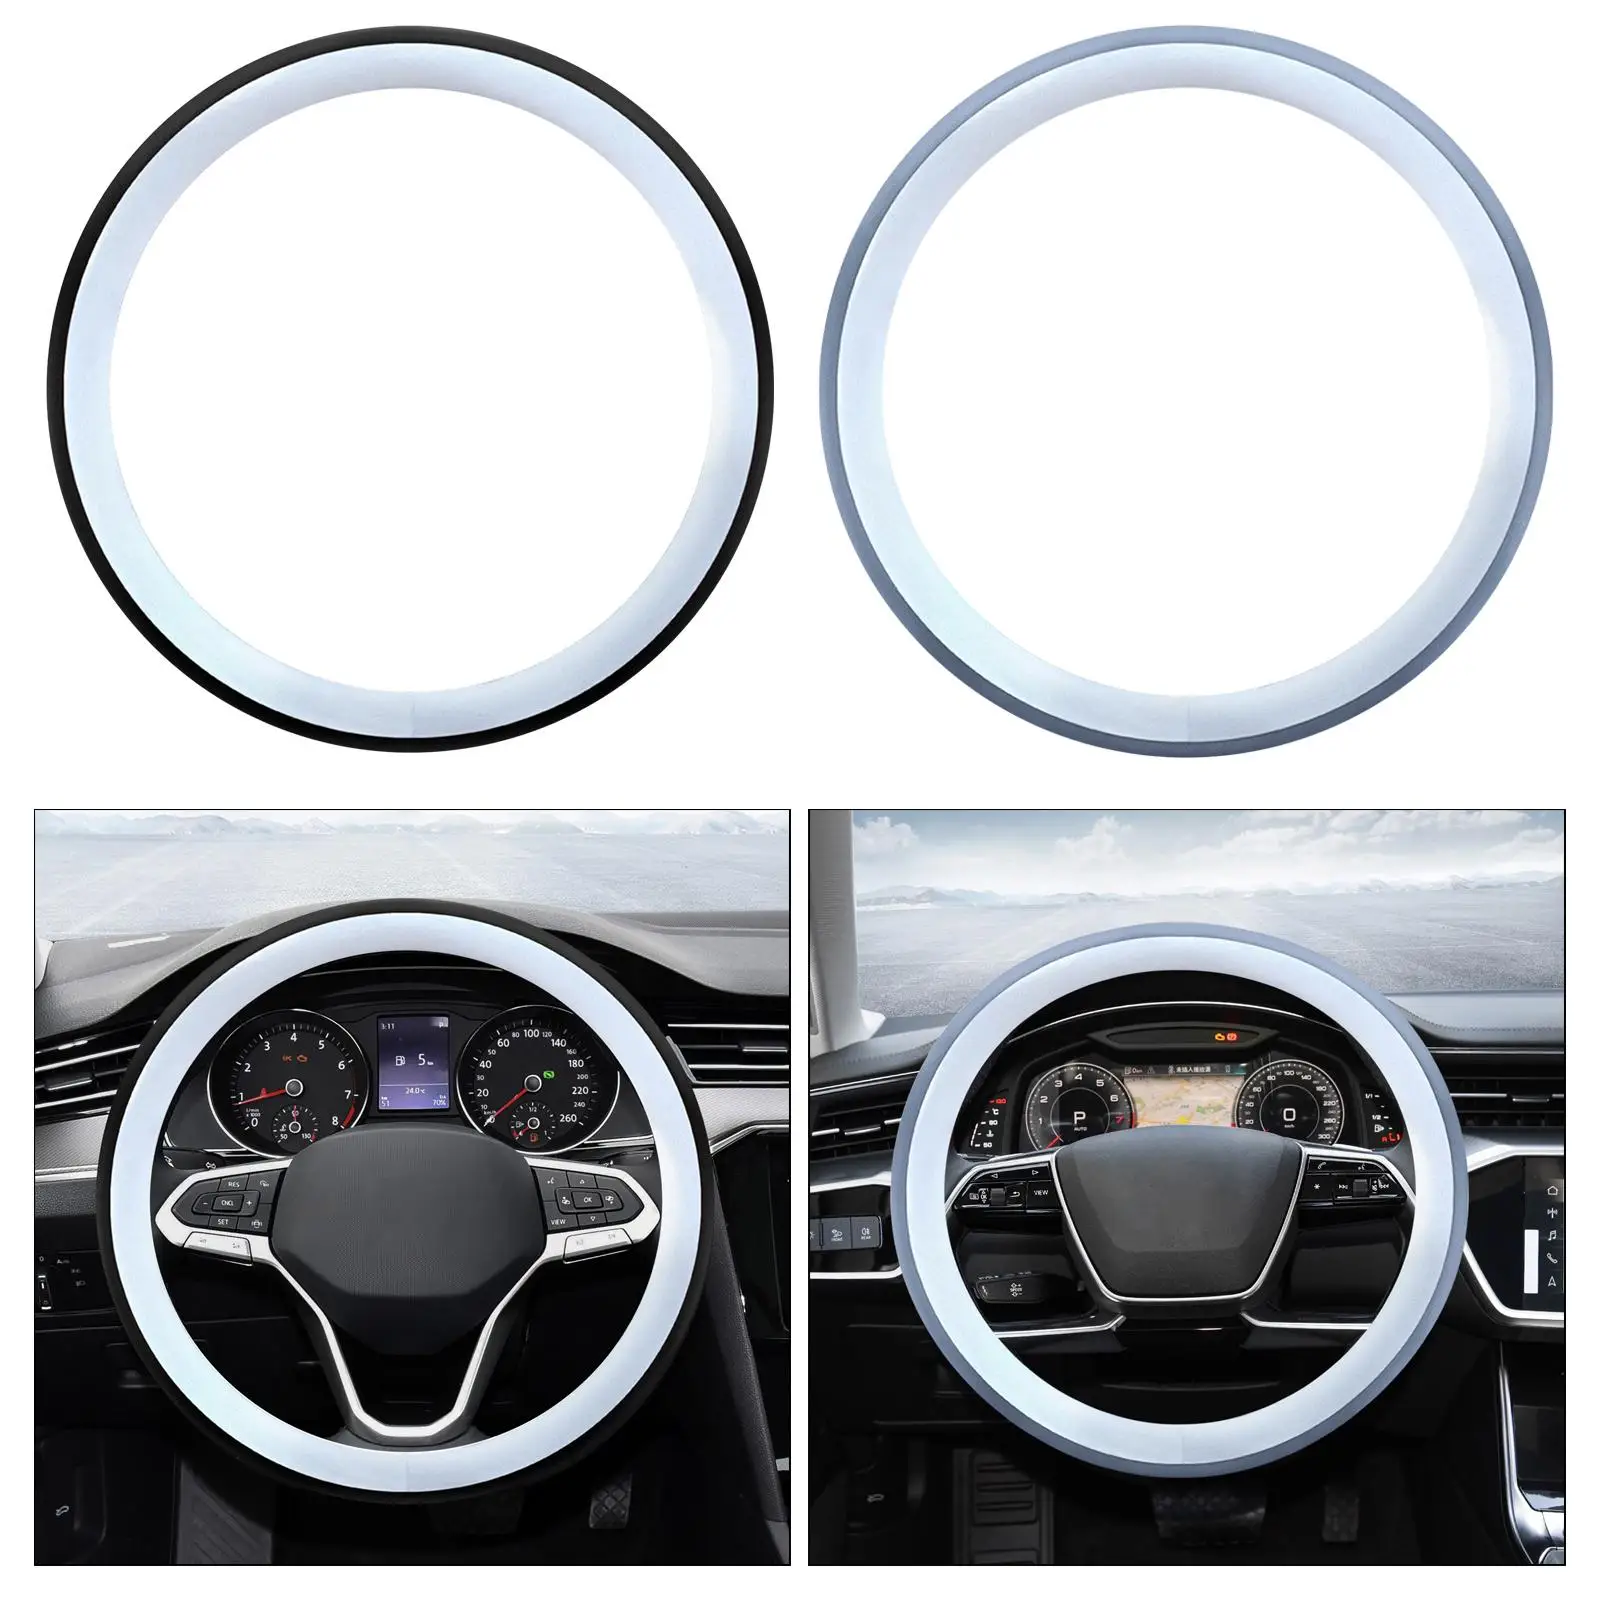 38cm Steering Wheel Cover Protector Interior Accessories Winter for Suvs Trucks Comfortable Universal Wear Resistant Soft Plush